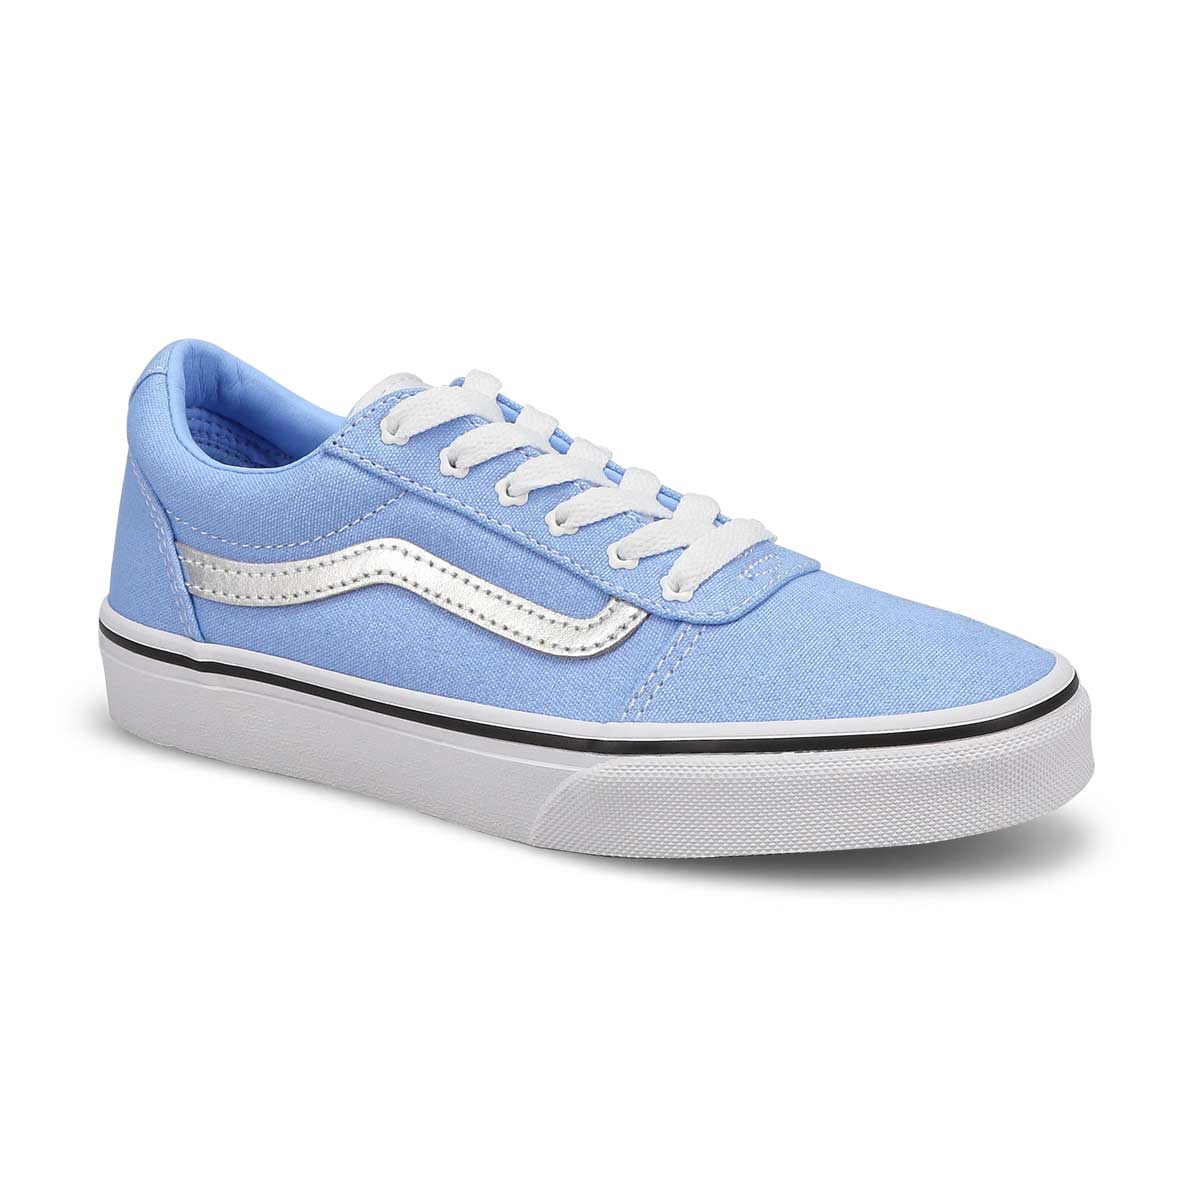 Girls' Ward Lace Up Sneaker - Blue/White